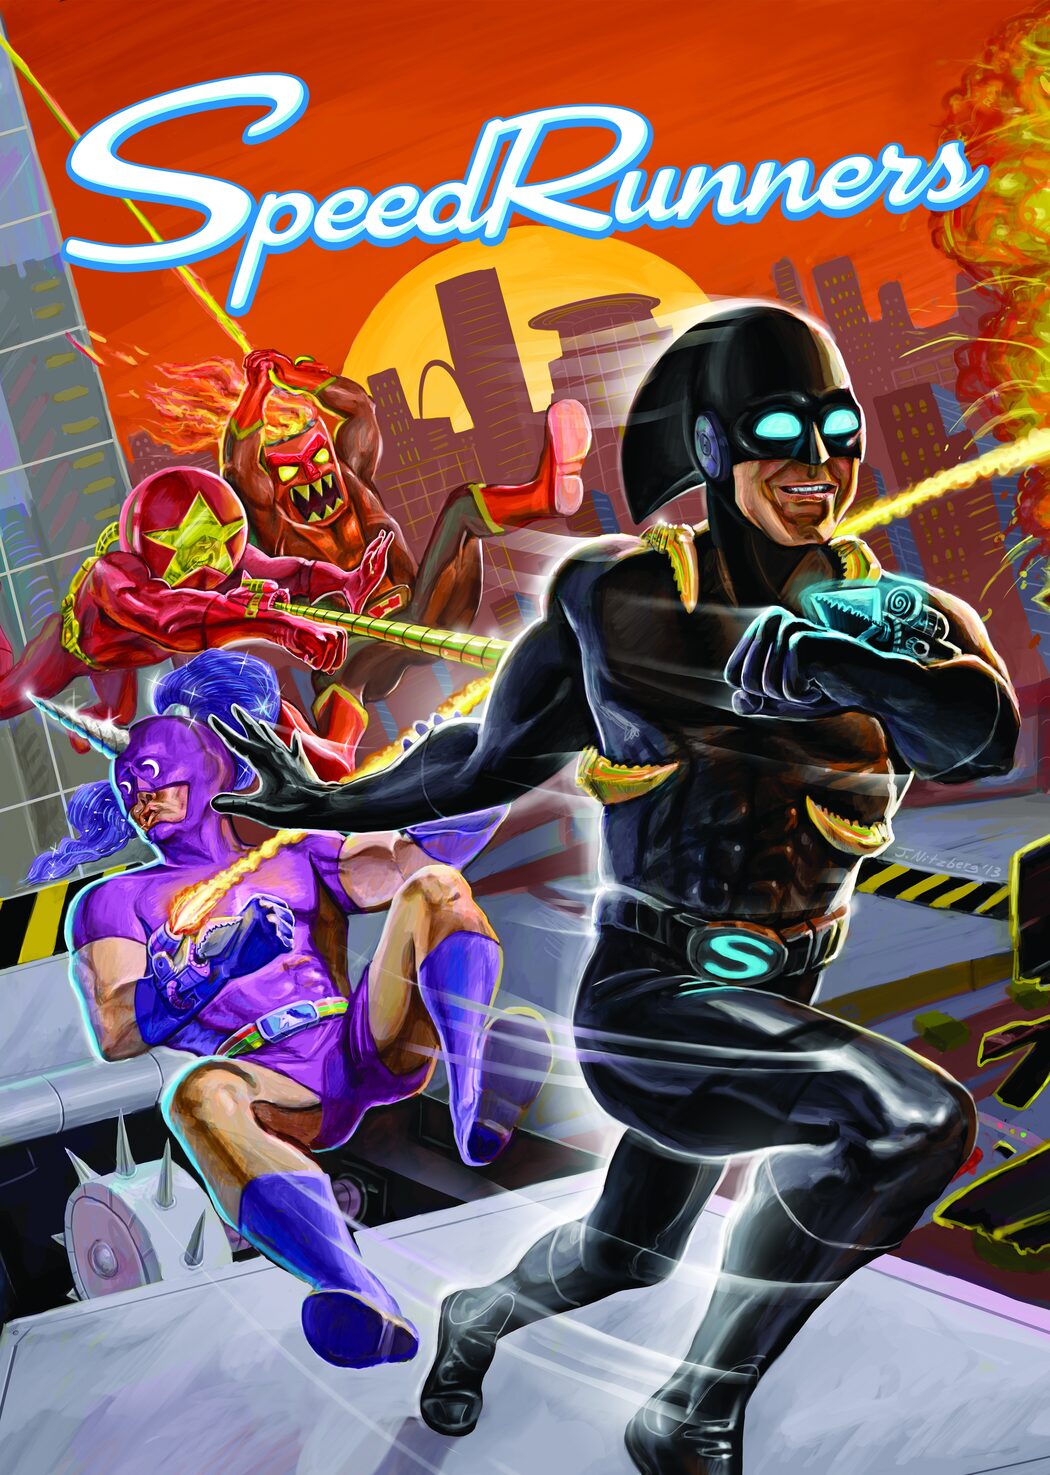 Speedrunners Review 2021 Is Speedrunners Worth It? 